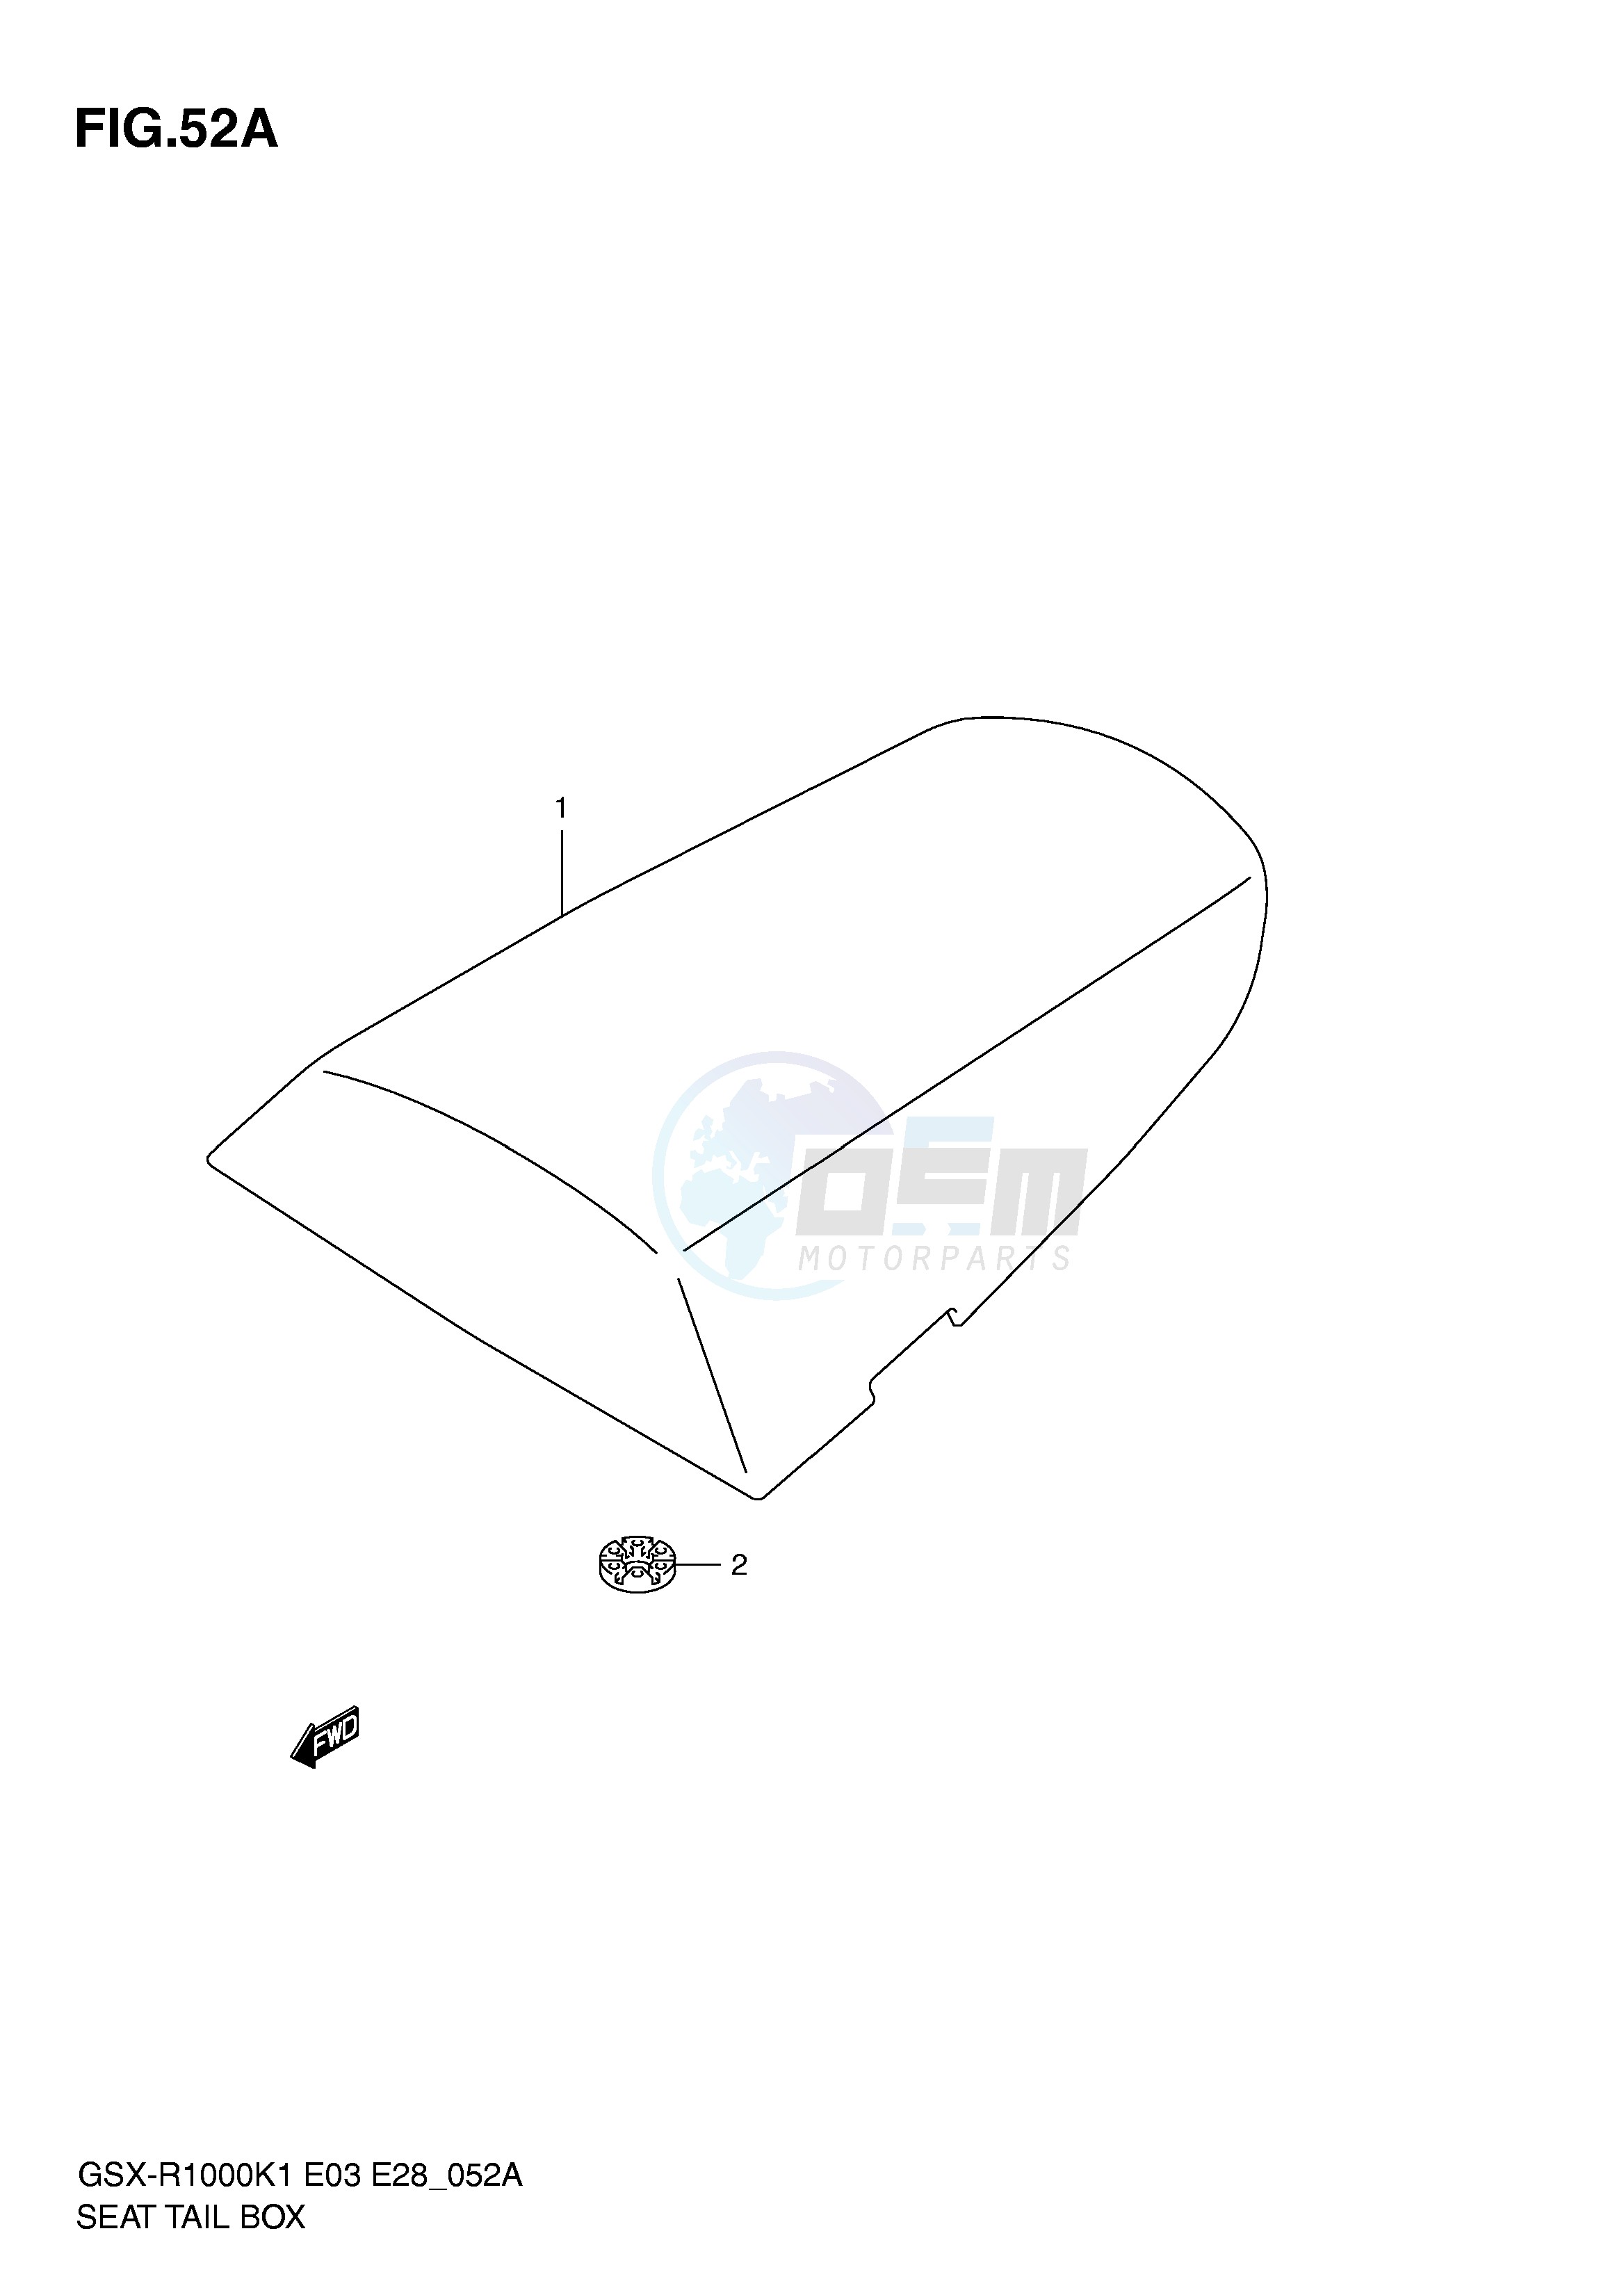 SEAT TAIL BOX (GSX-R1000K2) blueprint